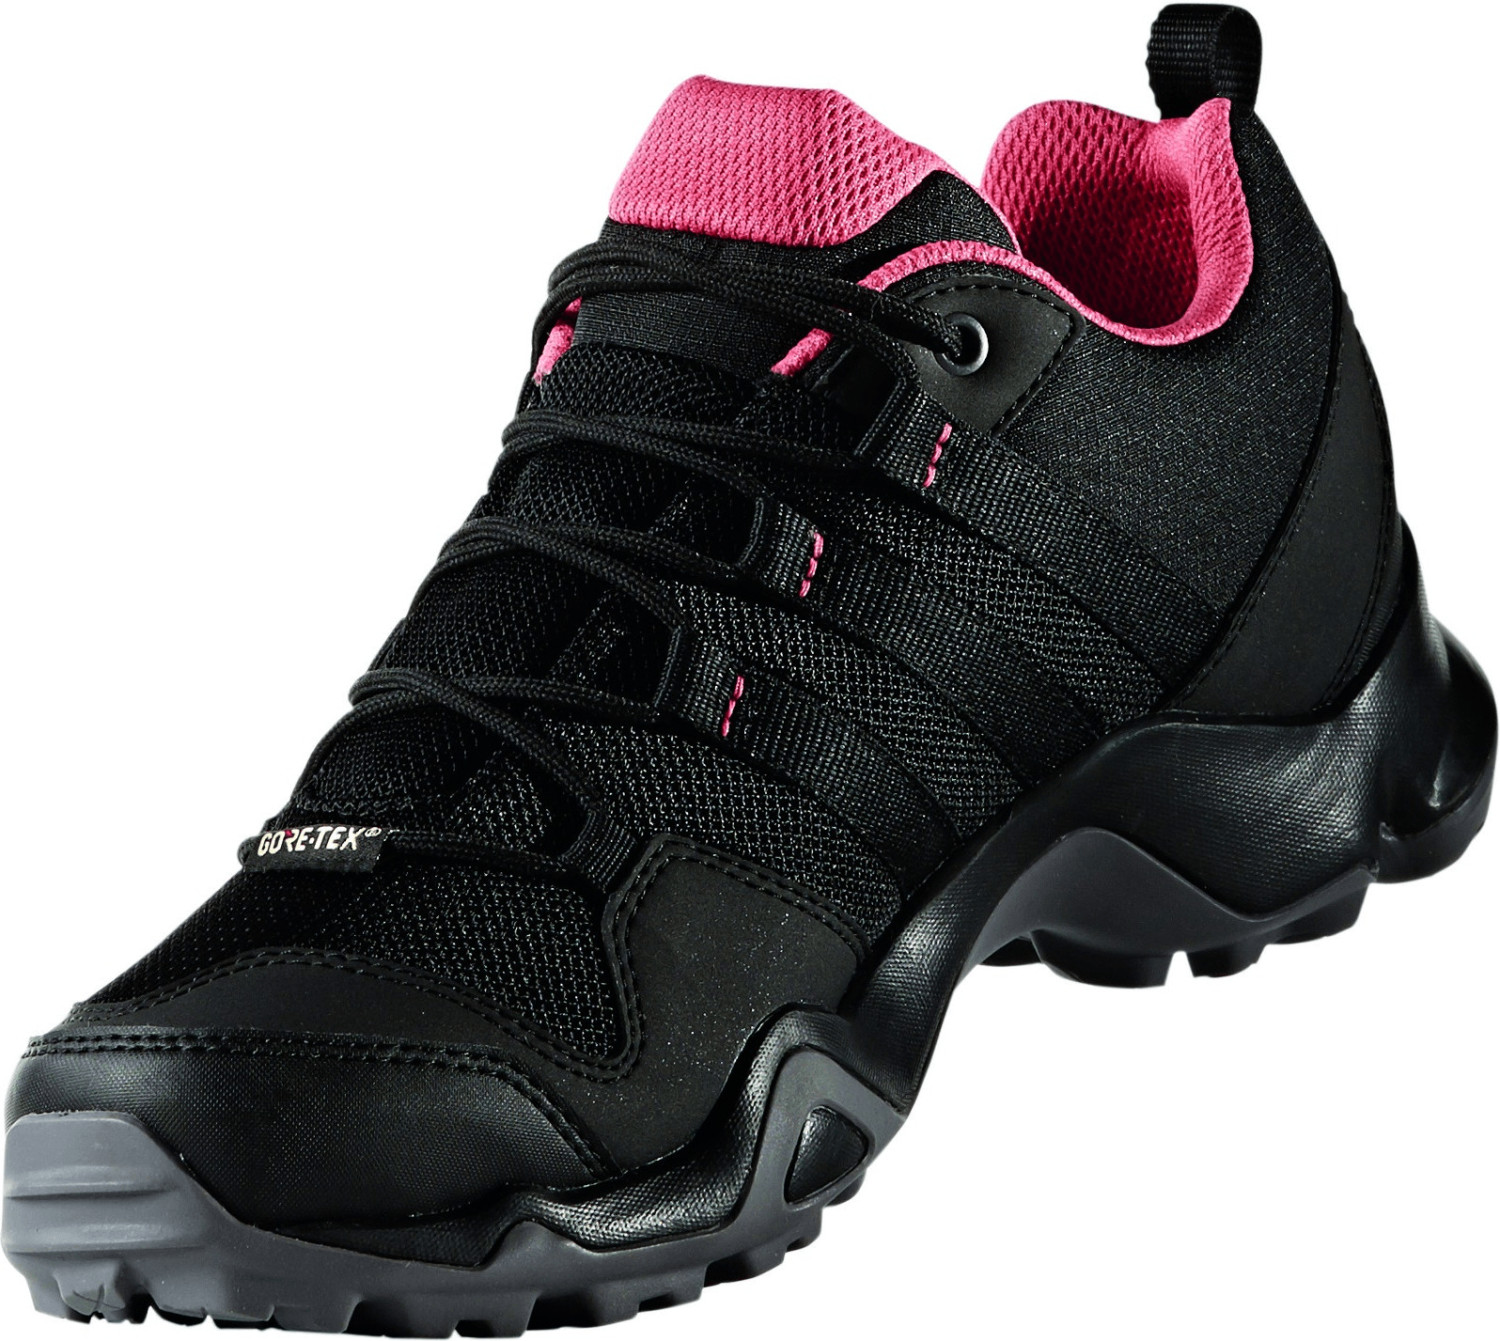 Adidas Terrex AX2R GTX W core black/tactile pink